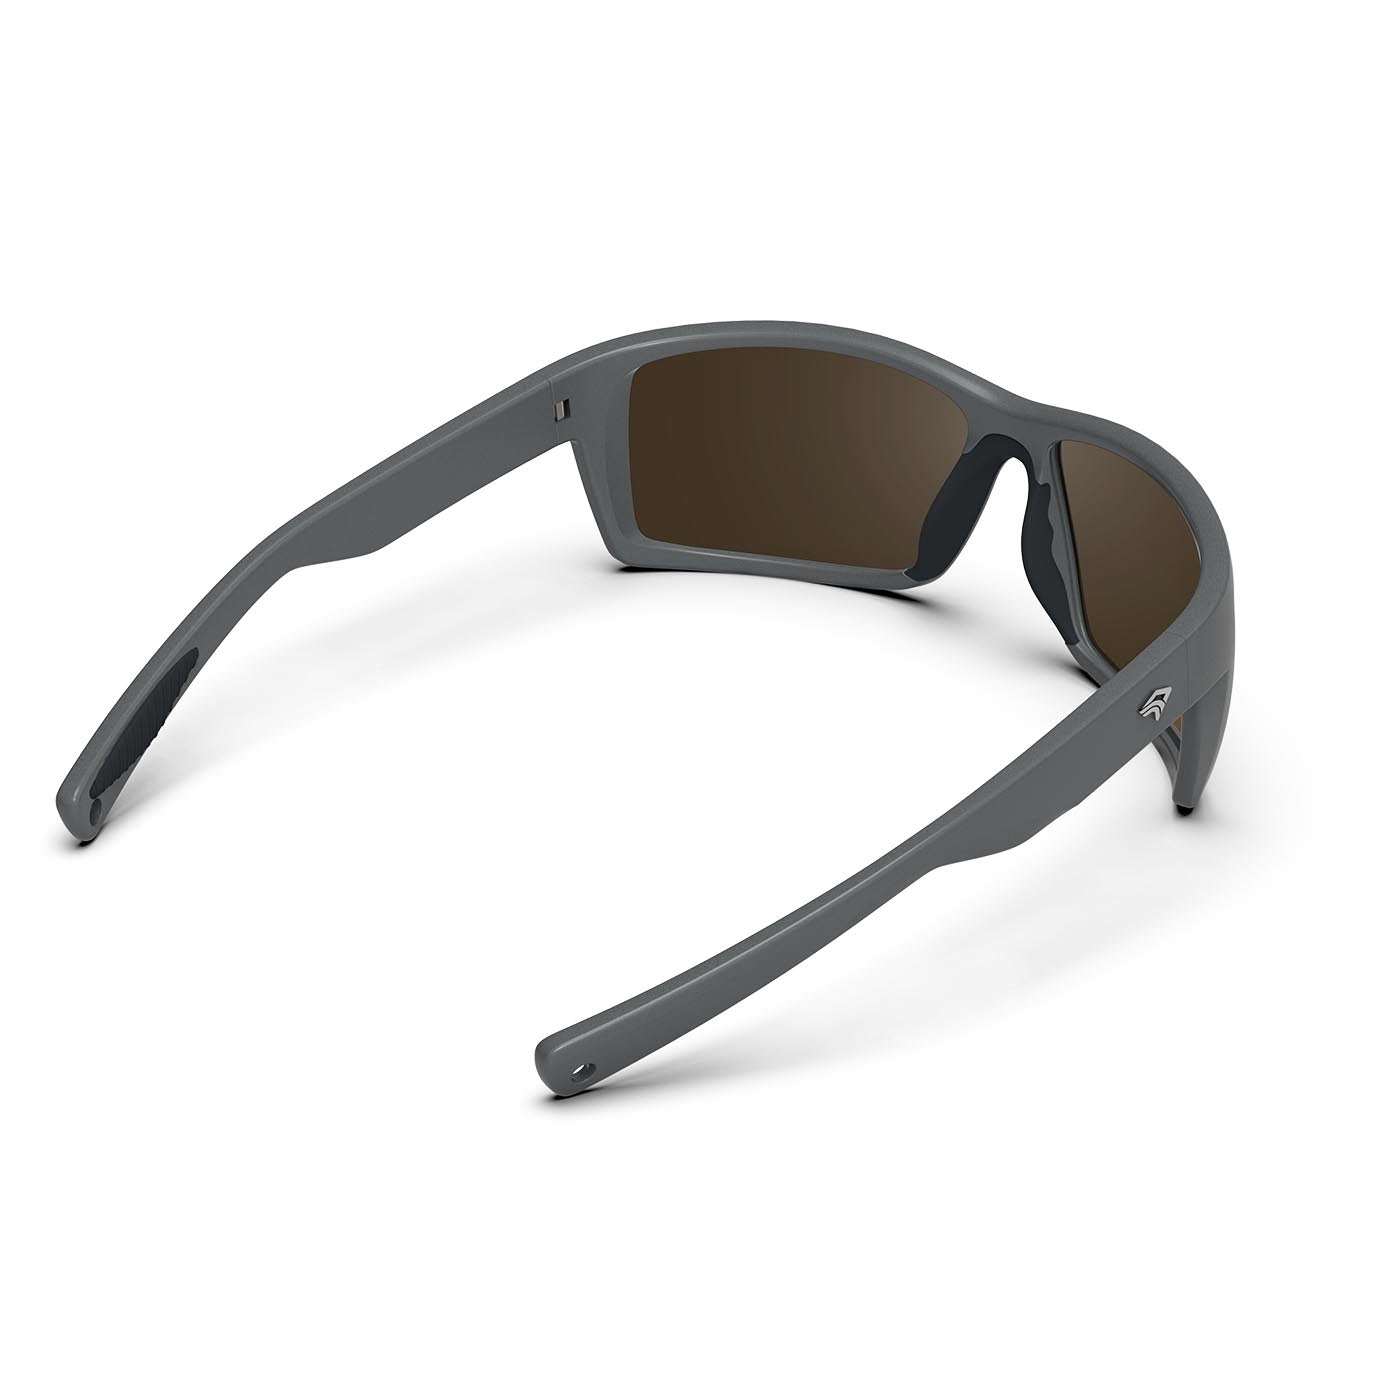 Torege Sports Polarized Sunglasses for Men Women Flexible Frame Cycling Running Driving Fishing Mountaineering Trekking Glasses TR24 (Matte Dark Blue